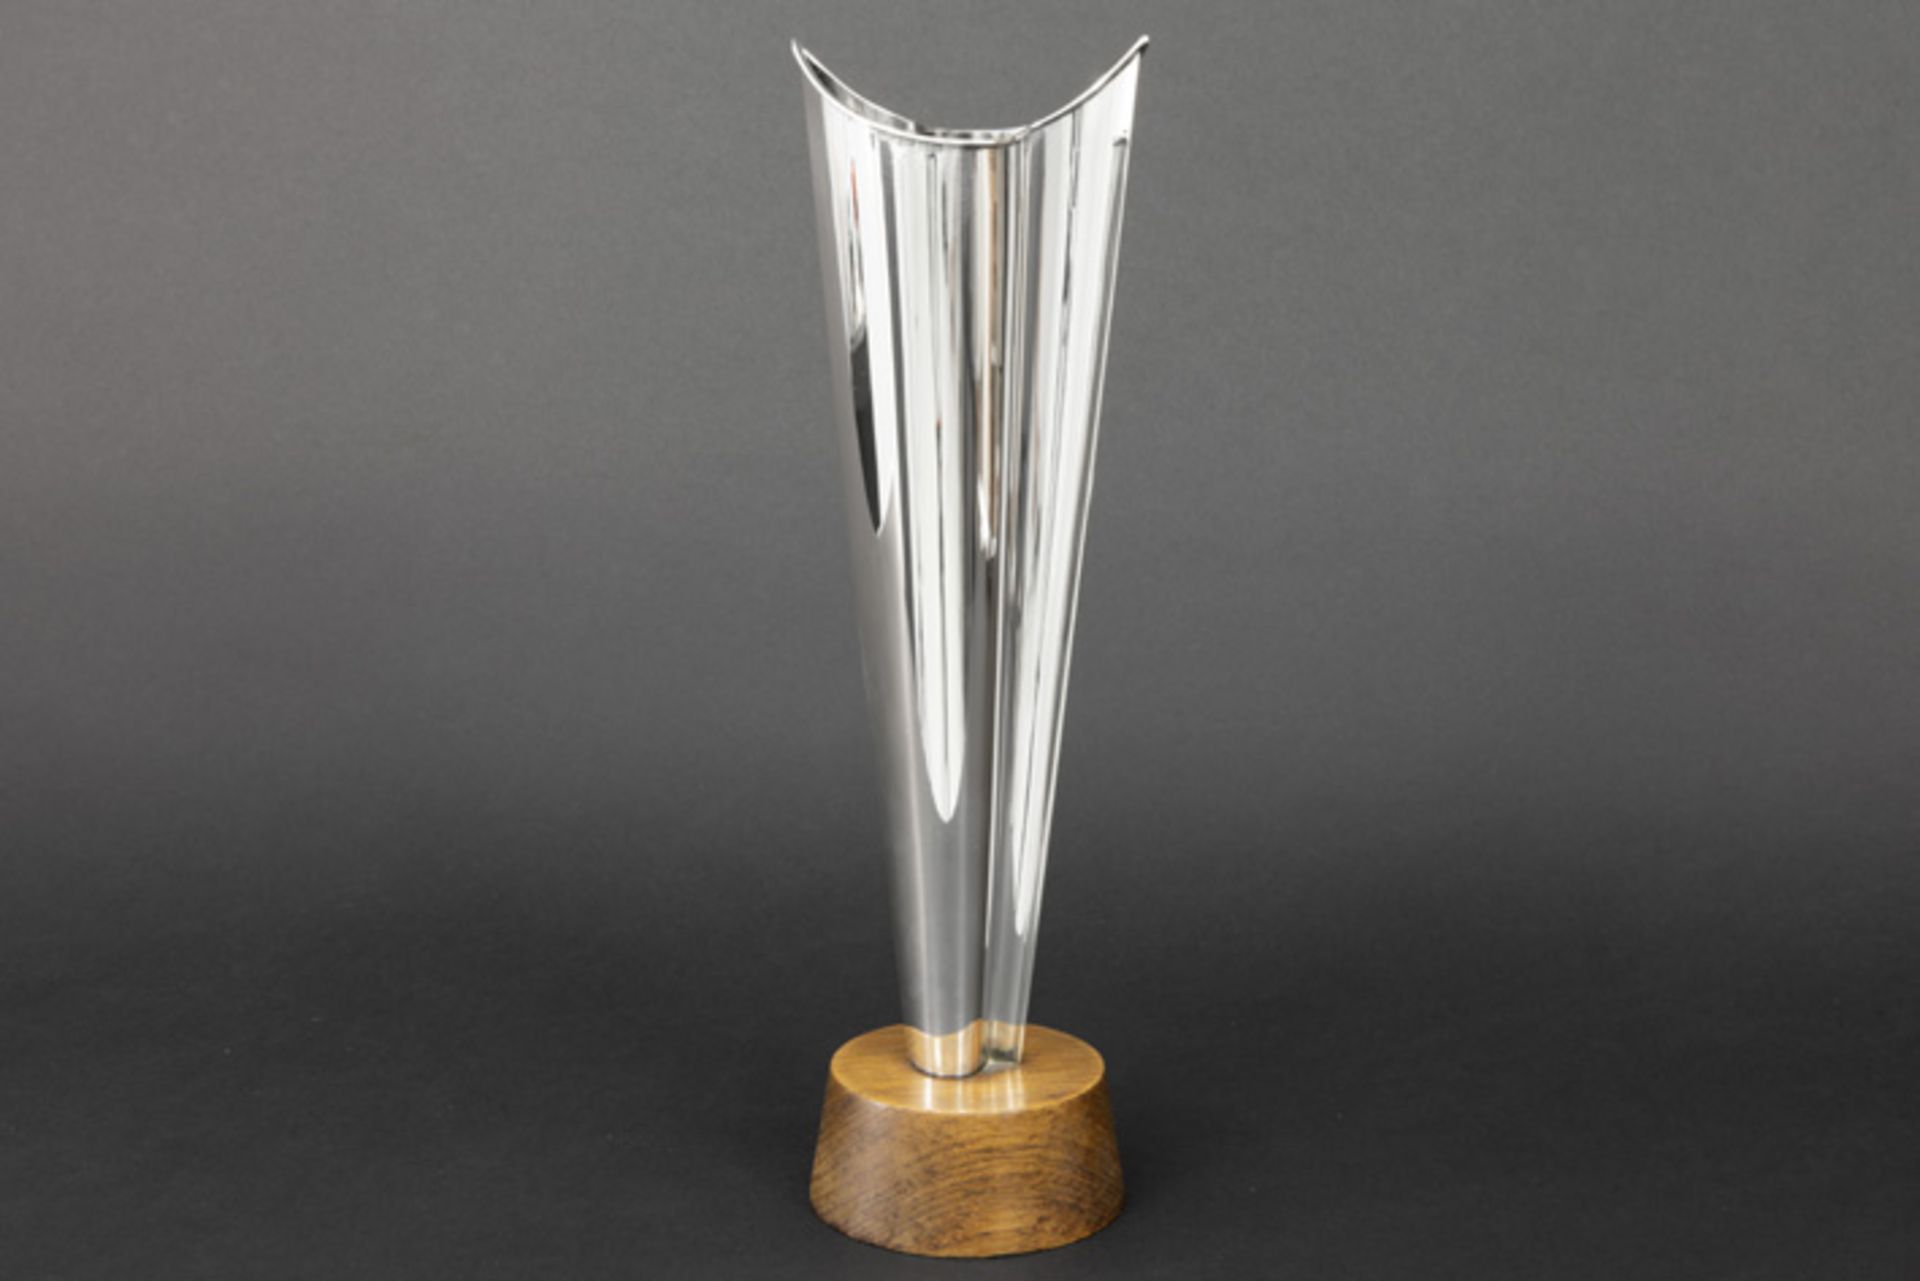 Tapio Wirkkala design vase in marked and 1964 dated silver - with his monogram||TAPIO WIRKKALA (1915